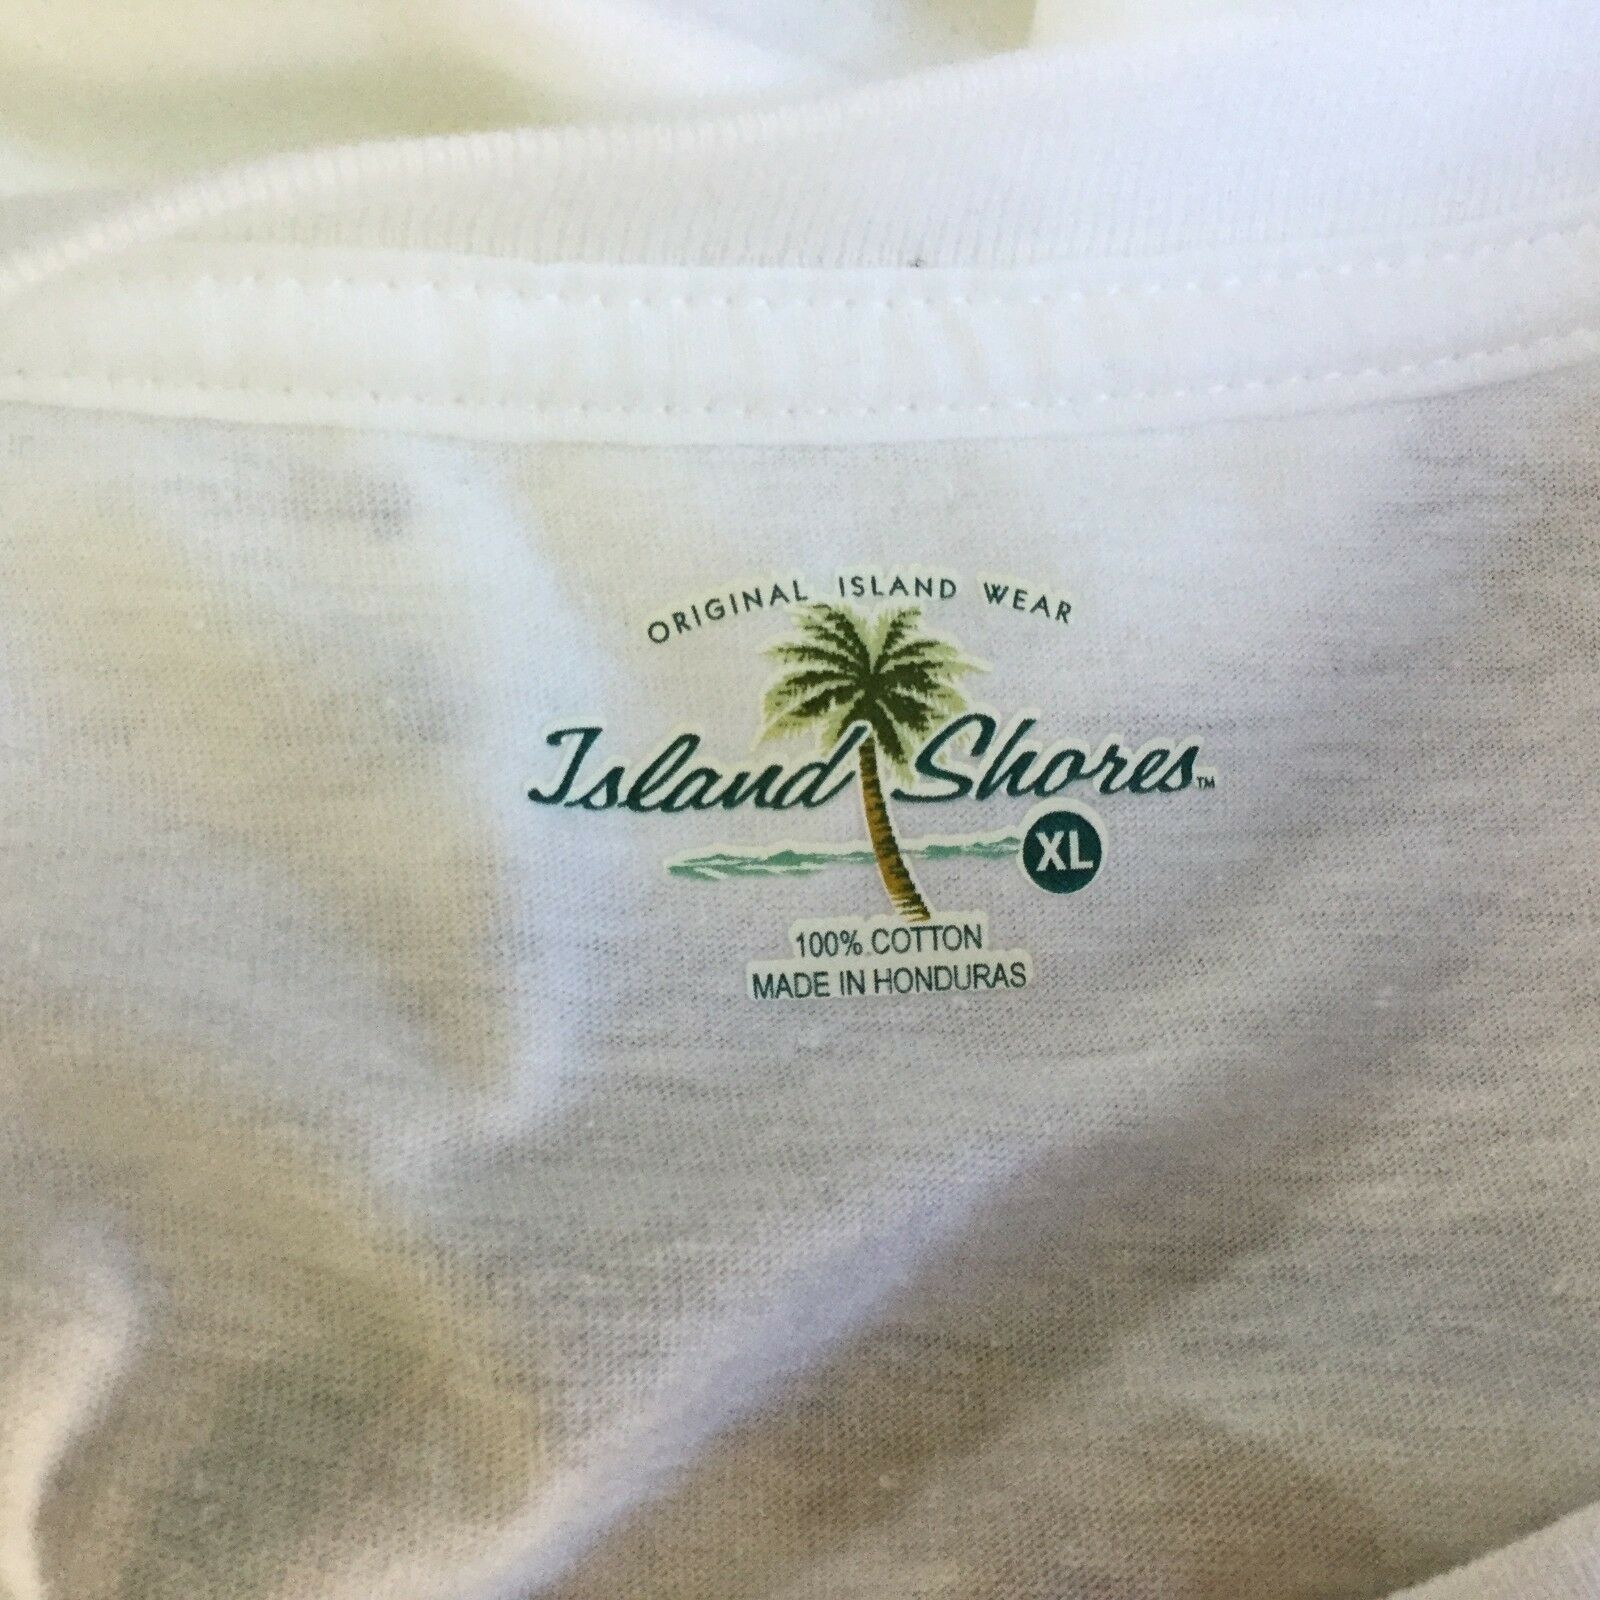 Island shores shirts